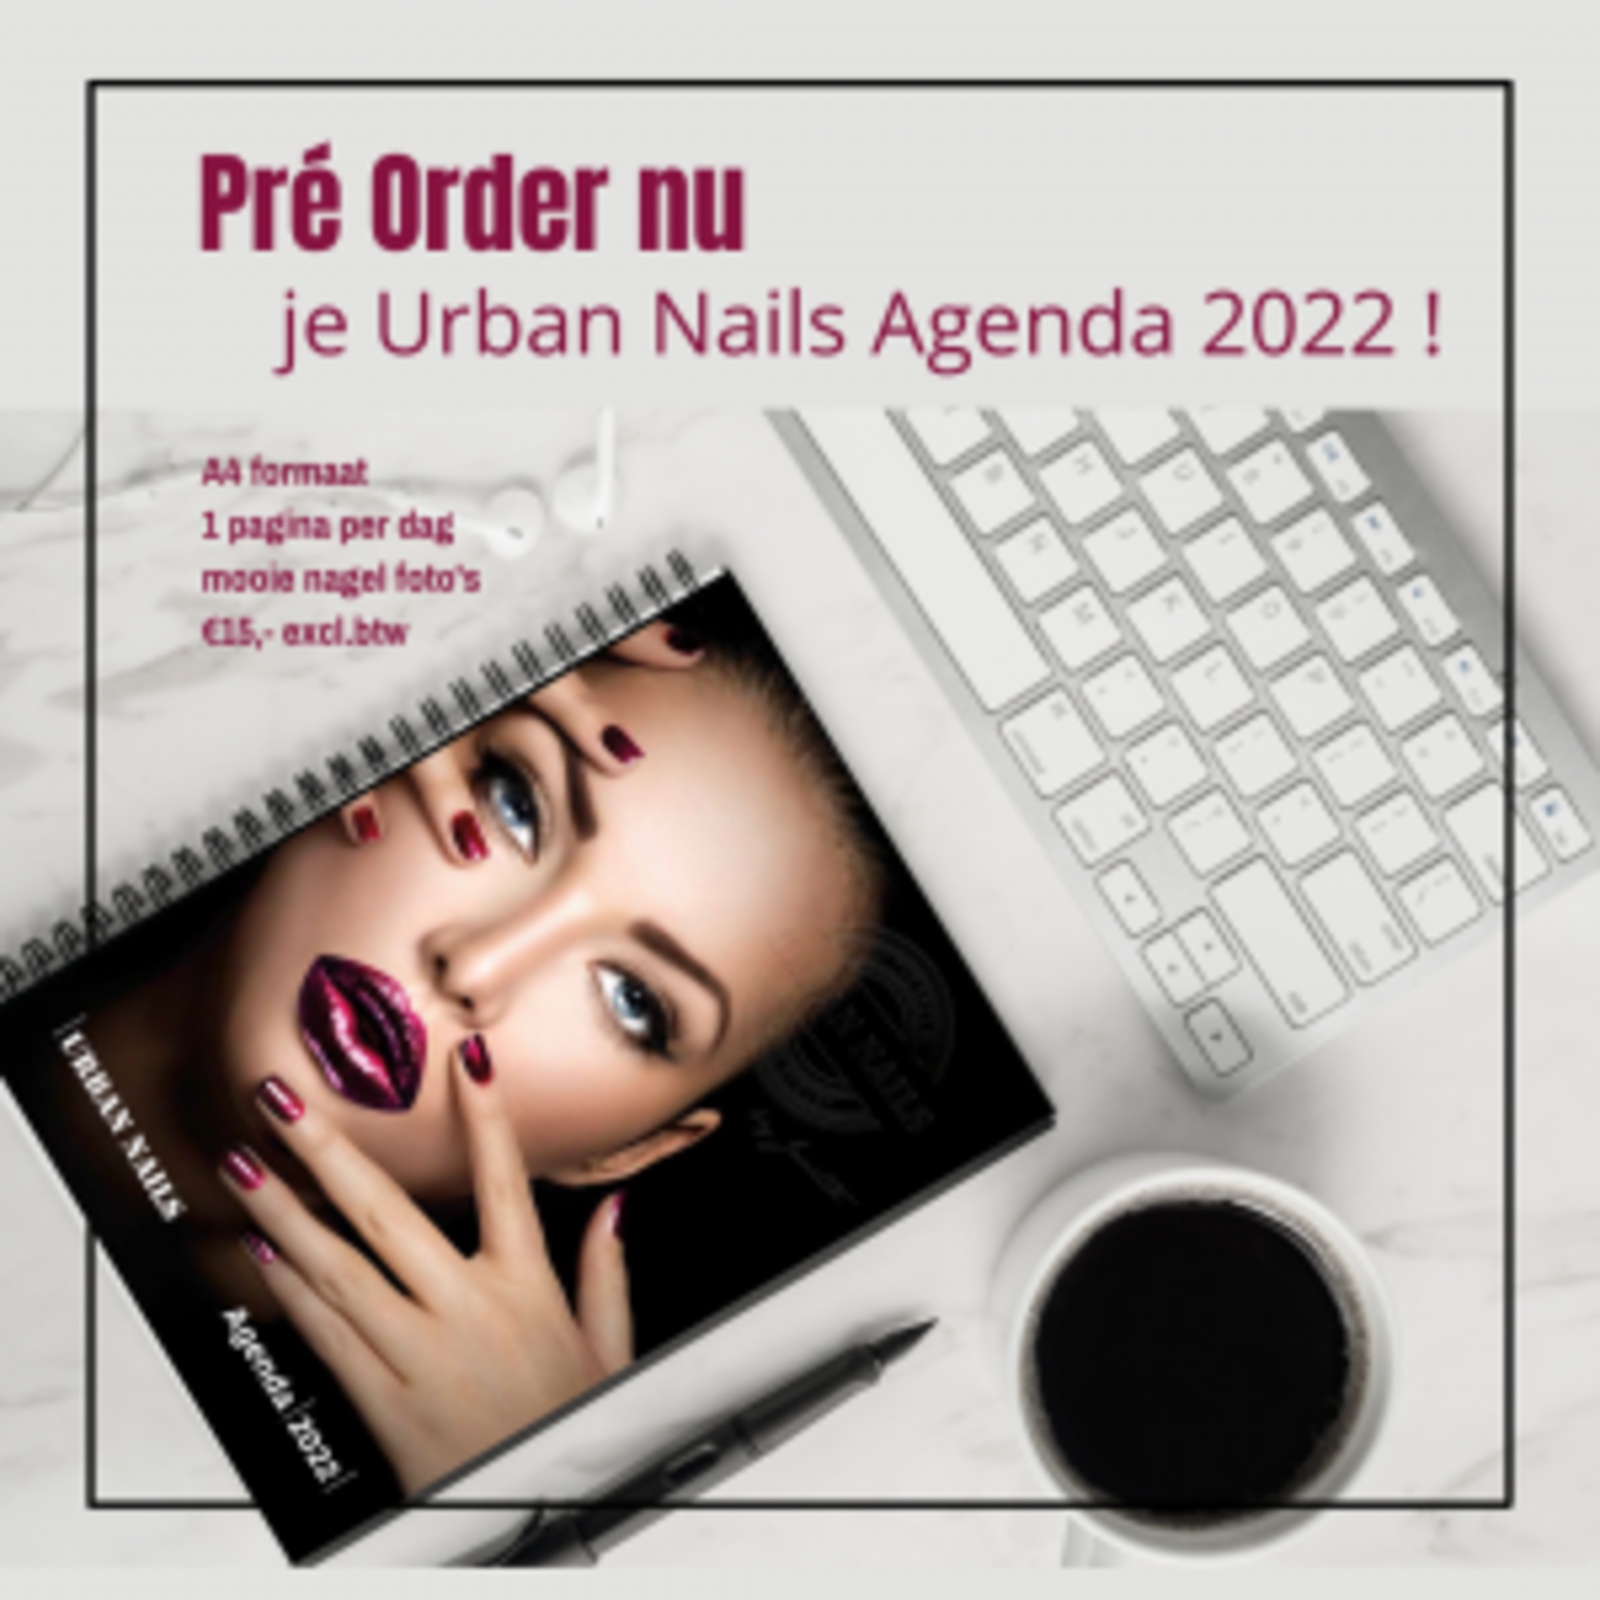 Urban nails Agenda A4 formaat 2022